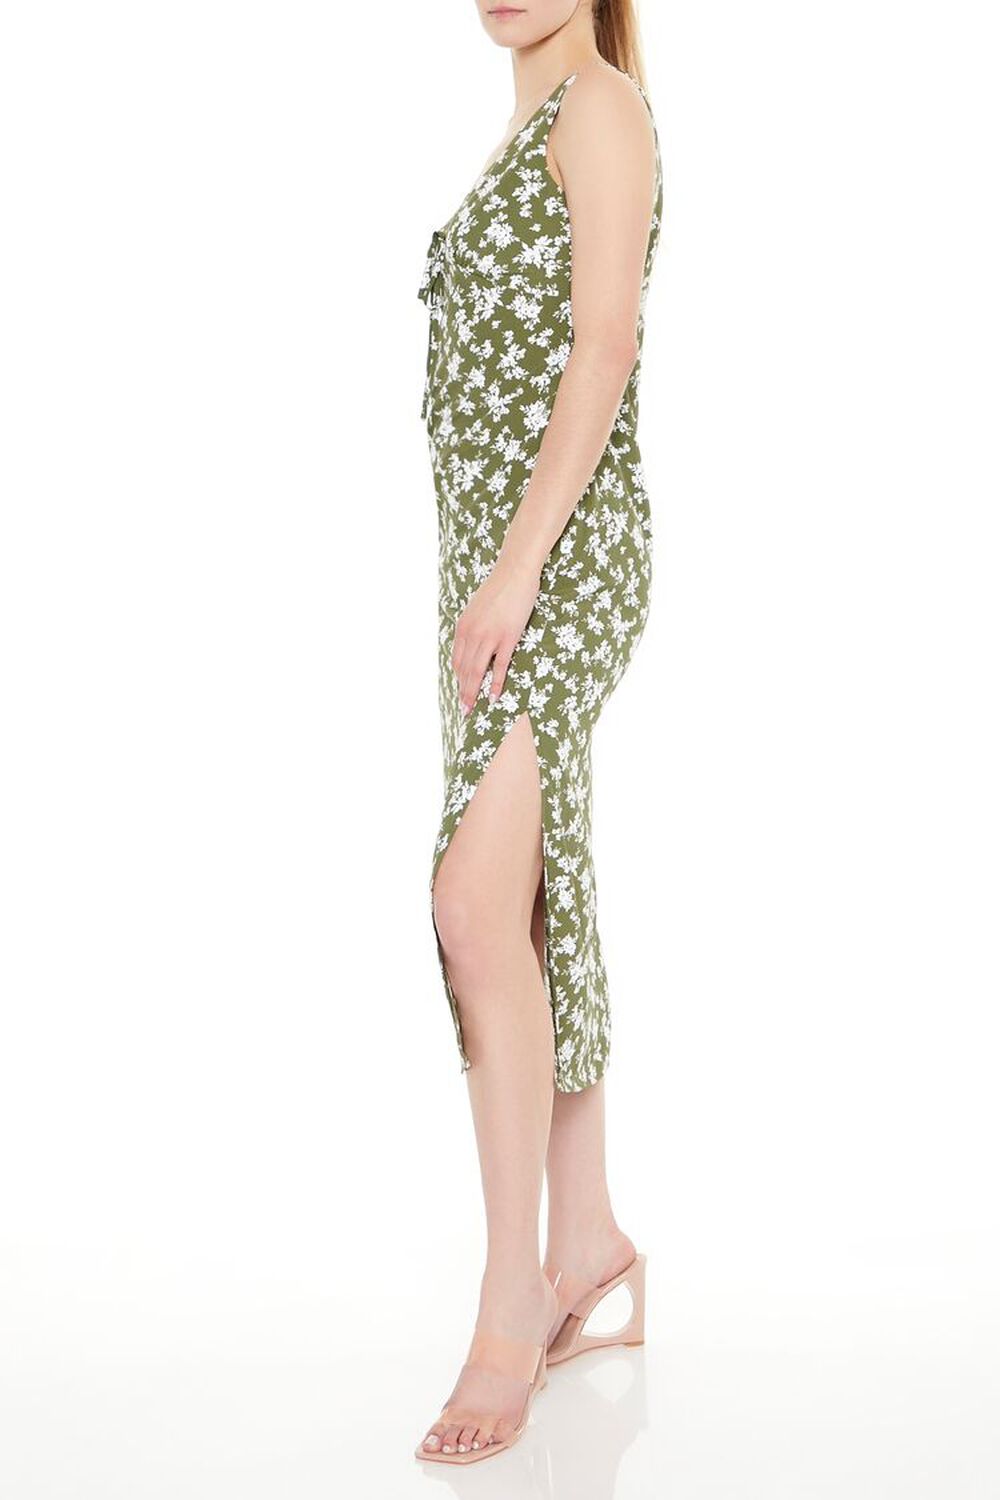 OLIVE/MULTI Floral Print Bow Slit Midi Dress, image 2